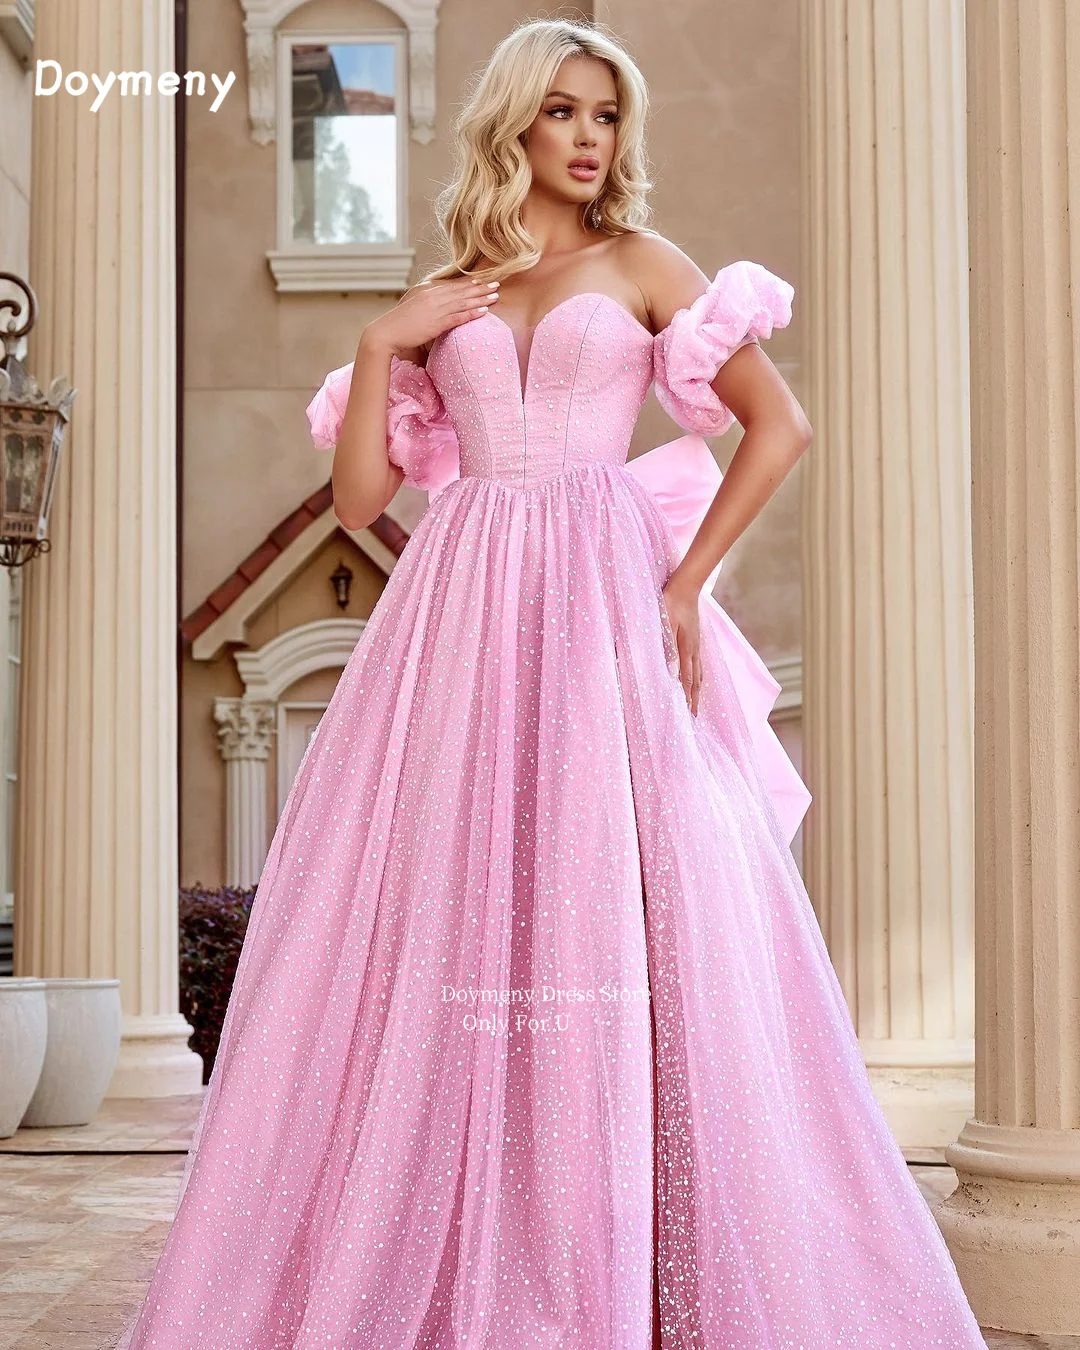 

Doymeny Sparkling Tulle Bow Prom Dresses Sweetheart Puffy Short Sleeves Evening Dresses A Line فساتين السهرة vestidos de fiesta